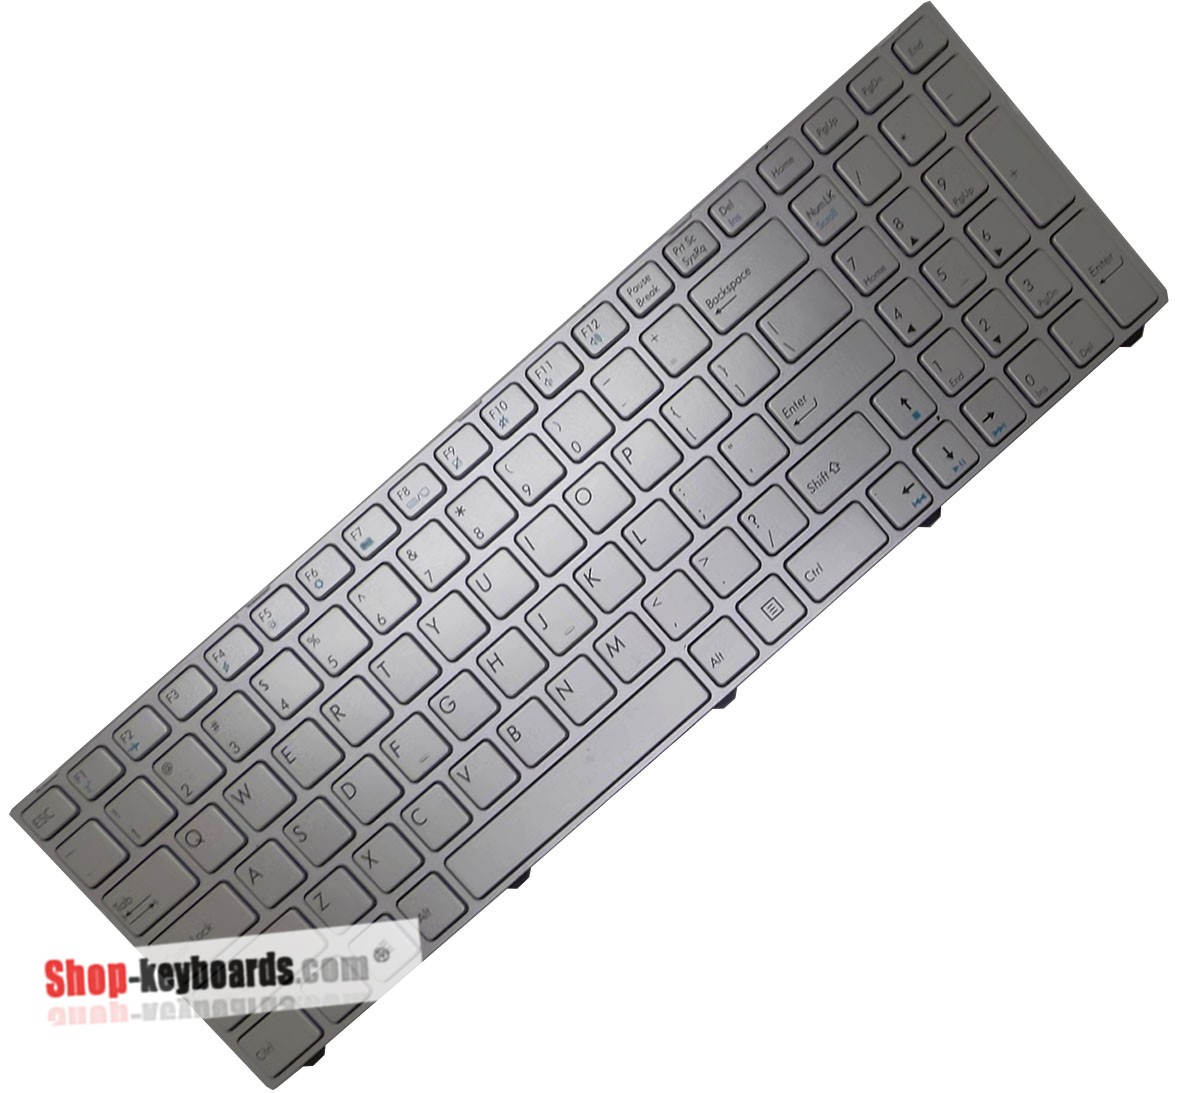 Medion Erazer P7643 Keyboard replacement